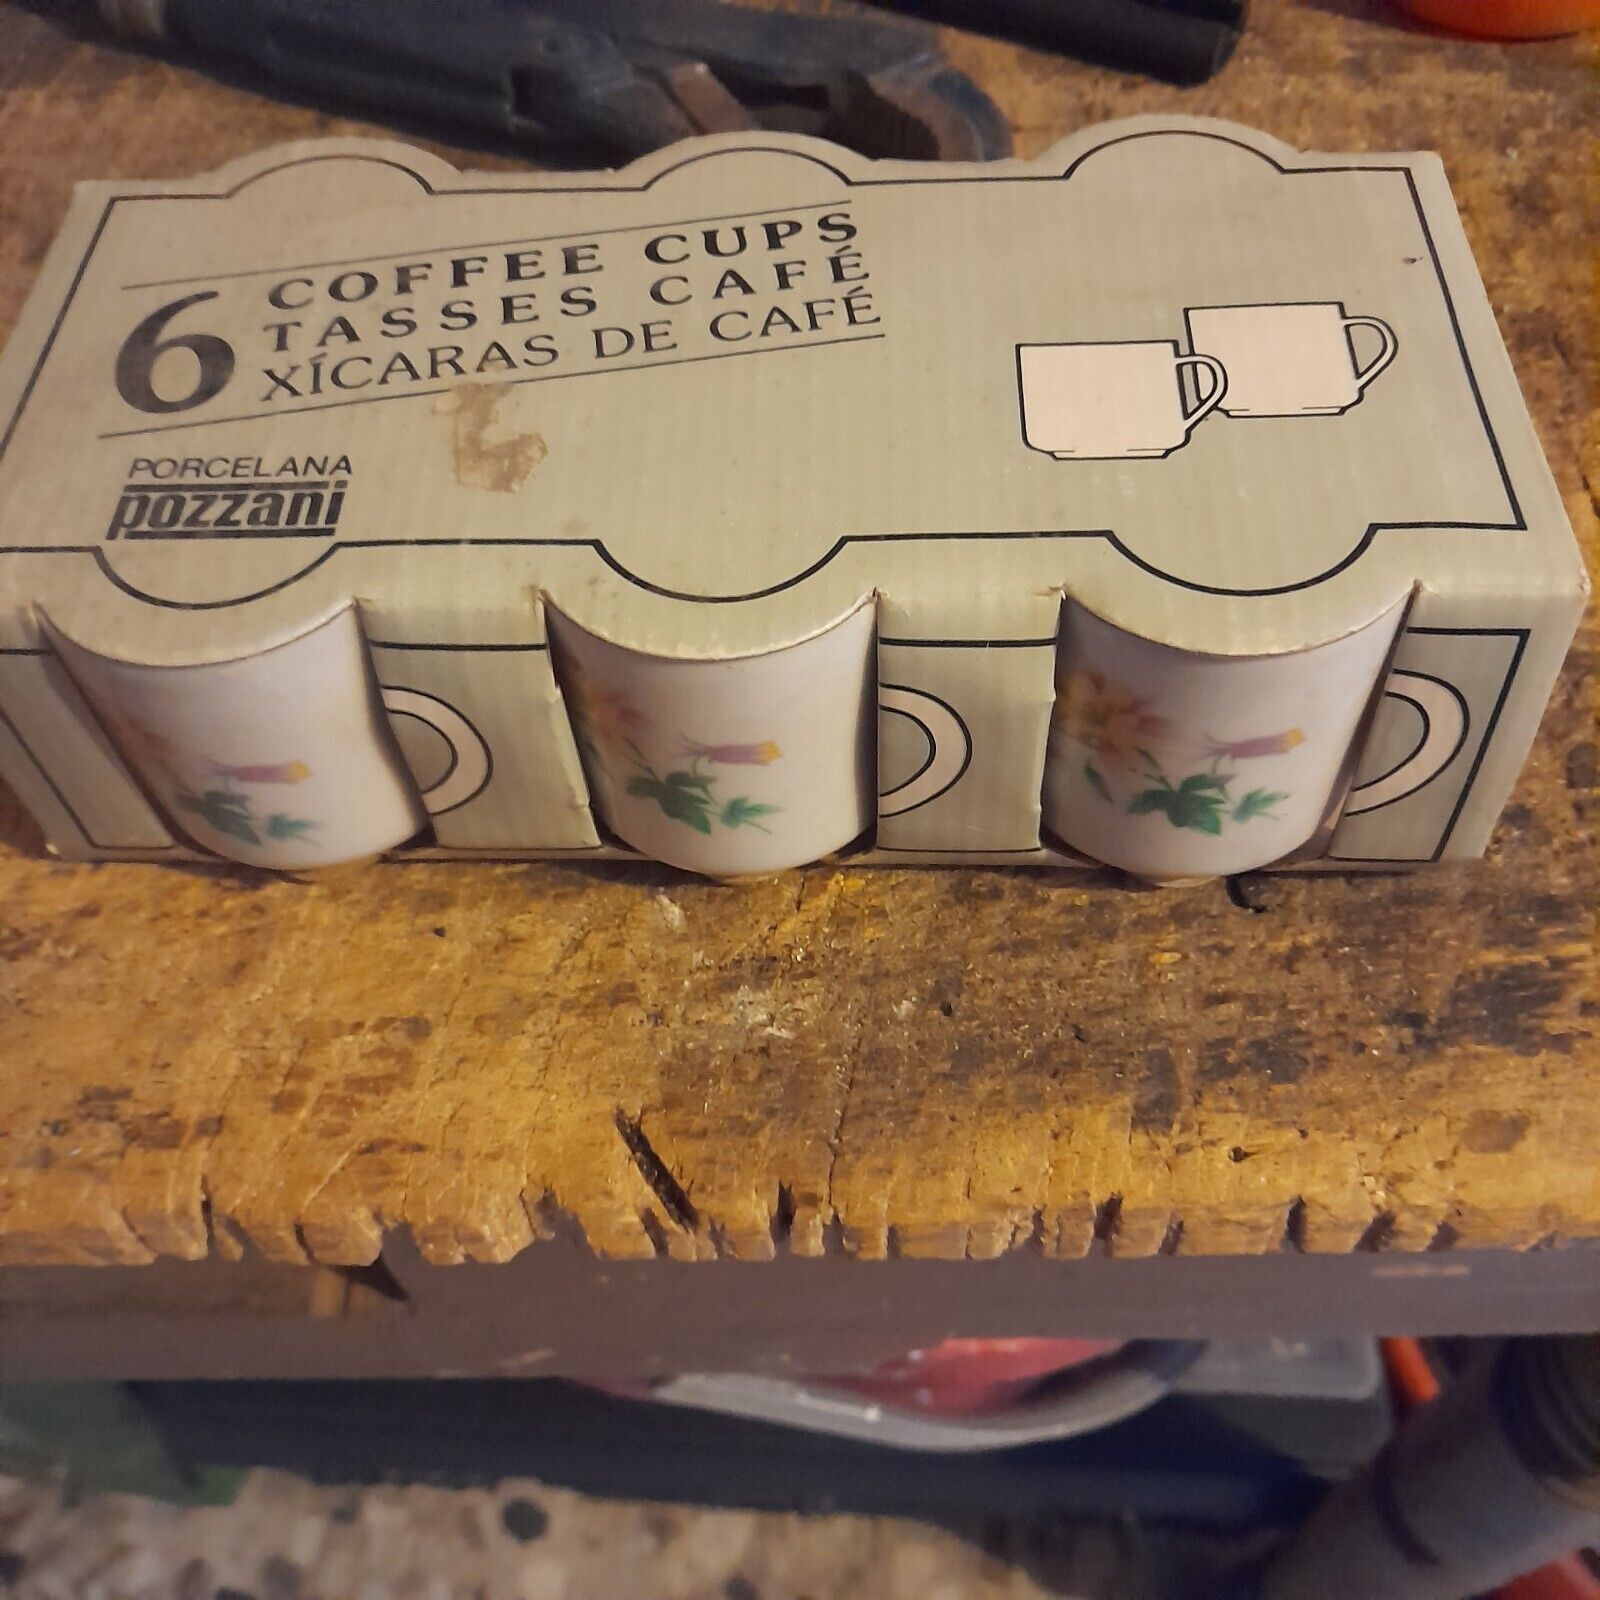 PORCELANA POZZANI: 6 COFFEE CUPS